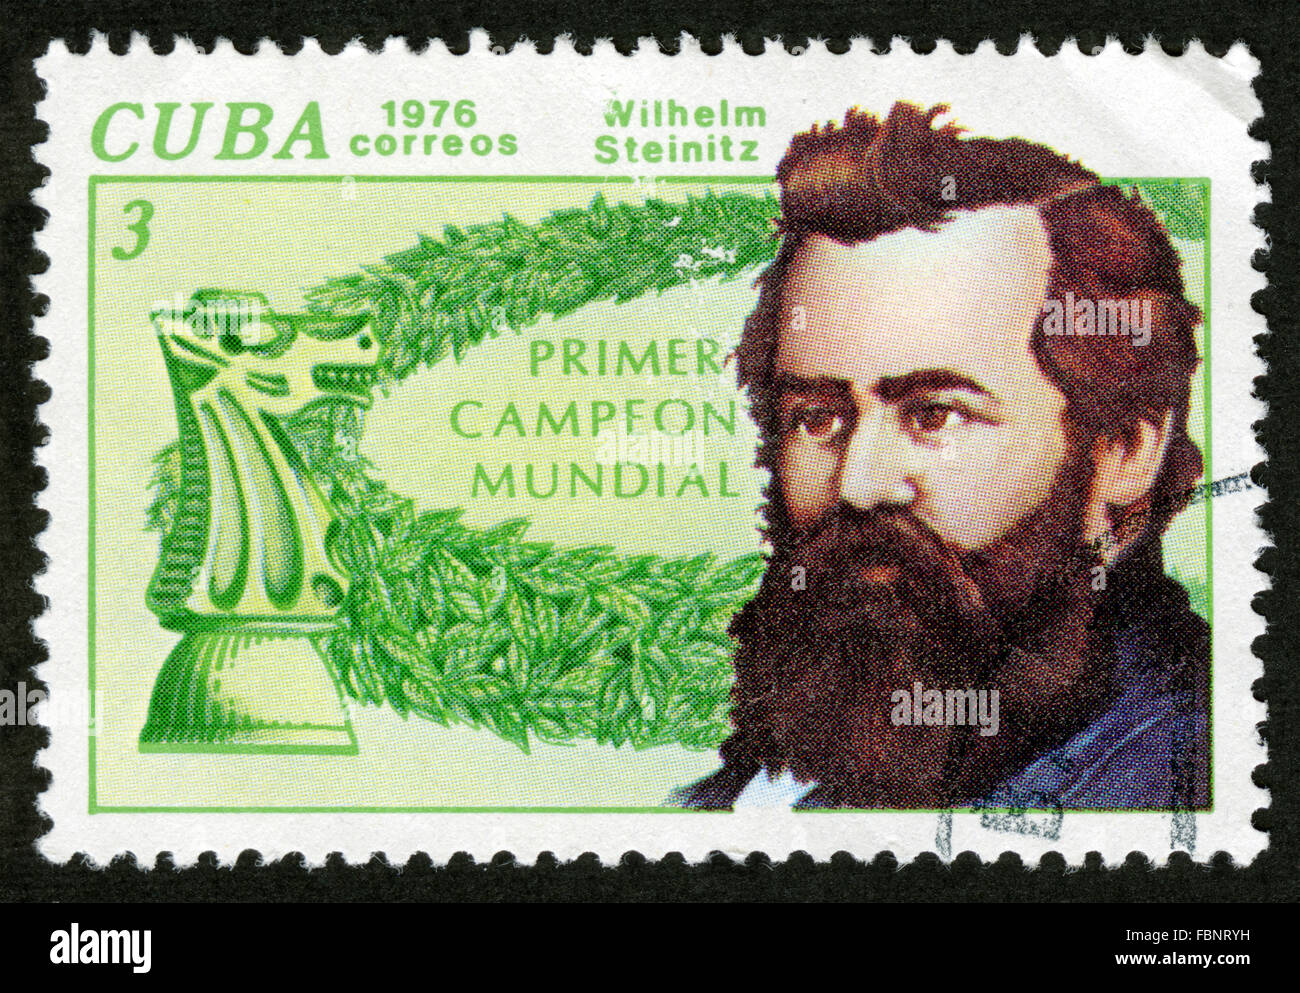 Cuba,1976,post mark,stamp. Wilhelm Steinitz ,Chess Stock Photo